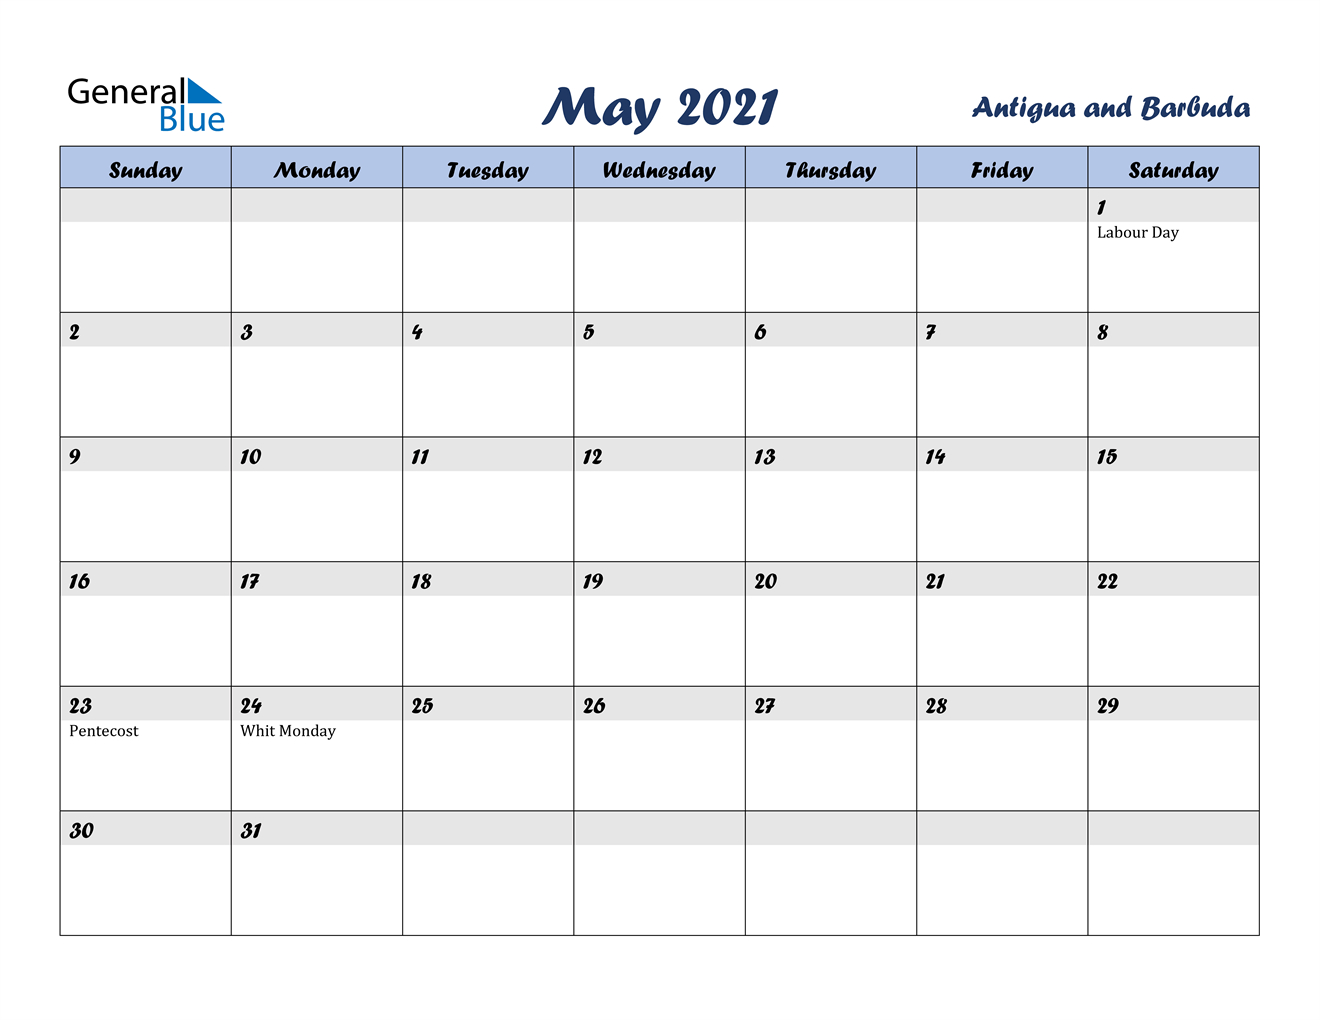 May 2021 Calendar - Antigua And Barbuda